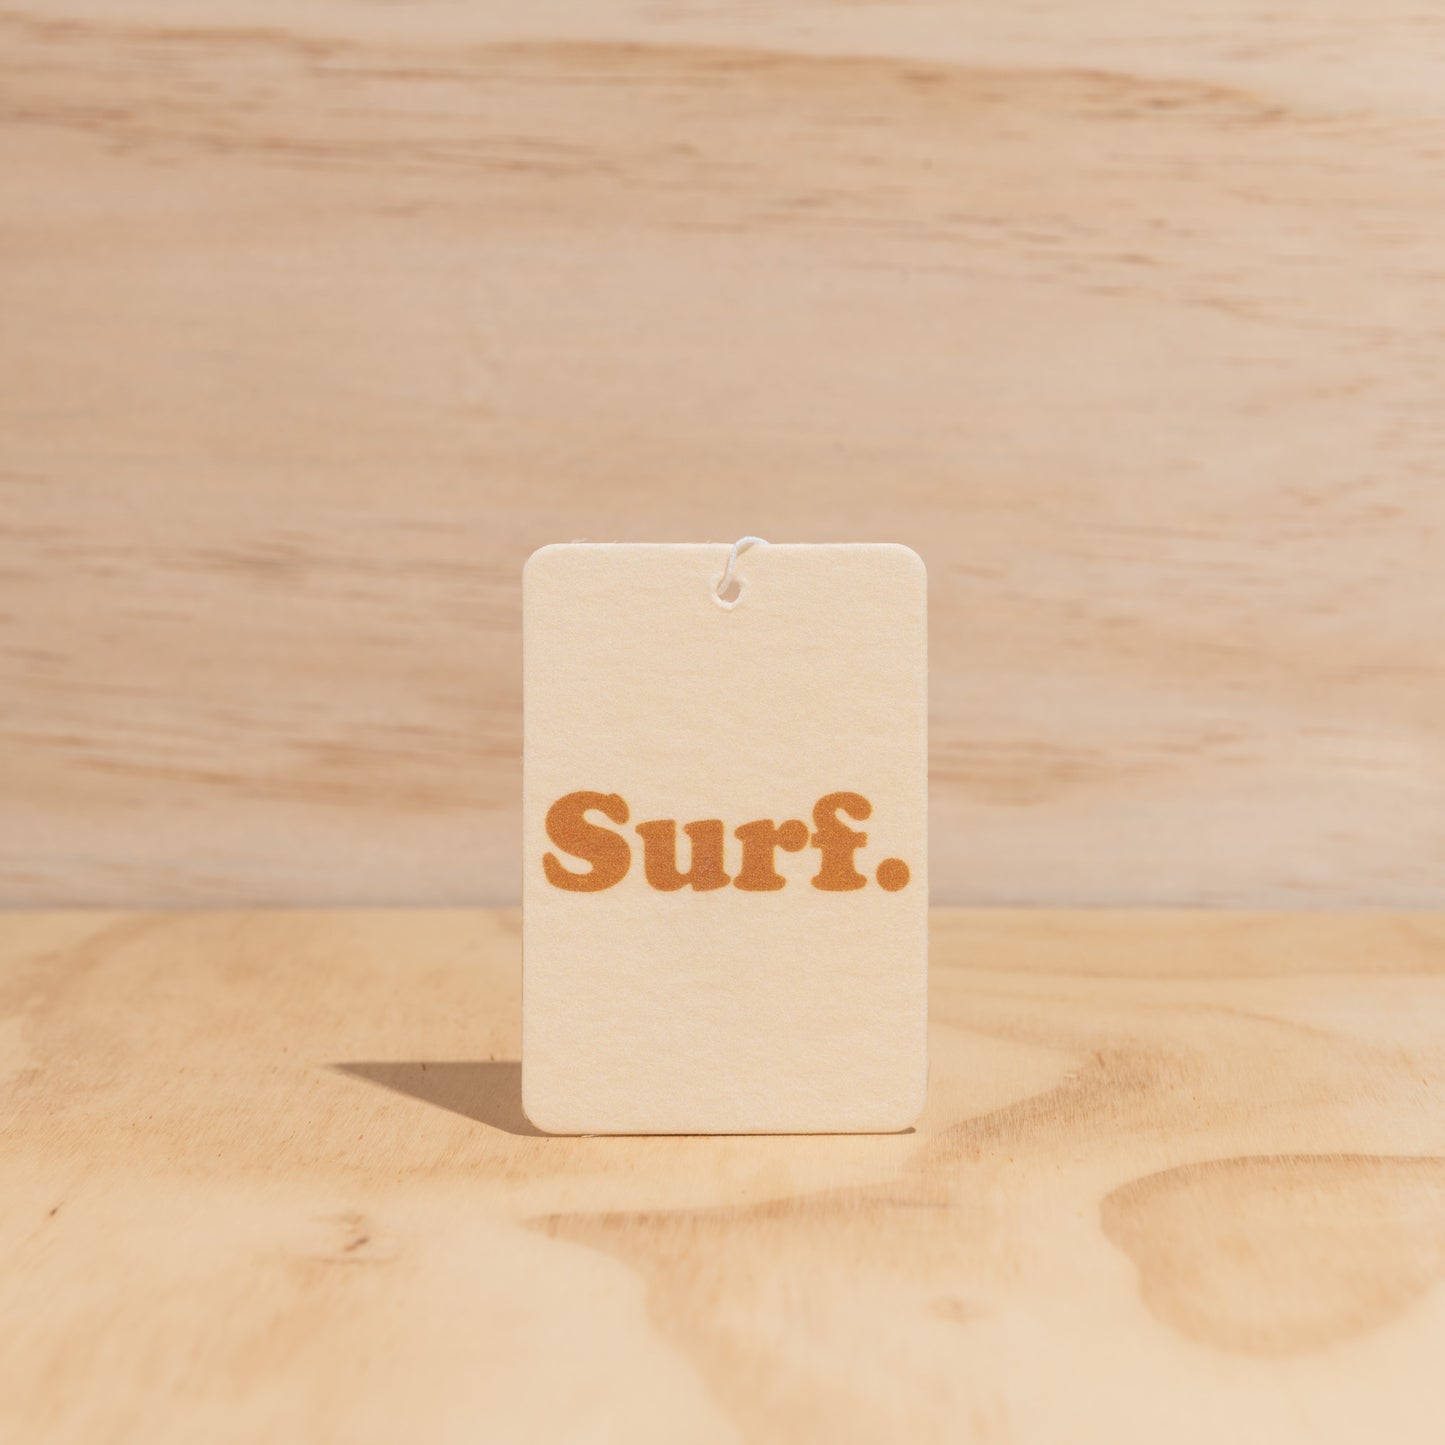 Surf Air Freshener - Ubud